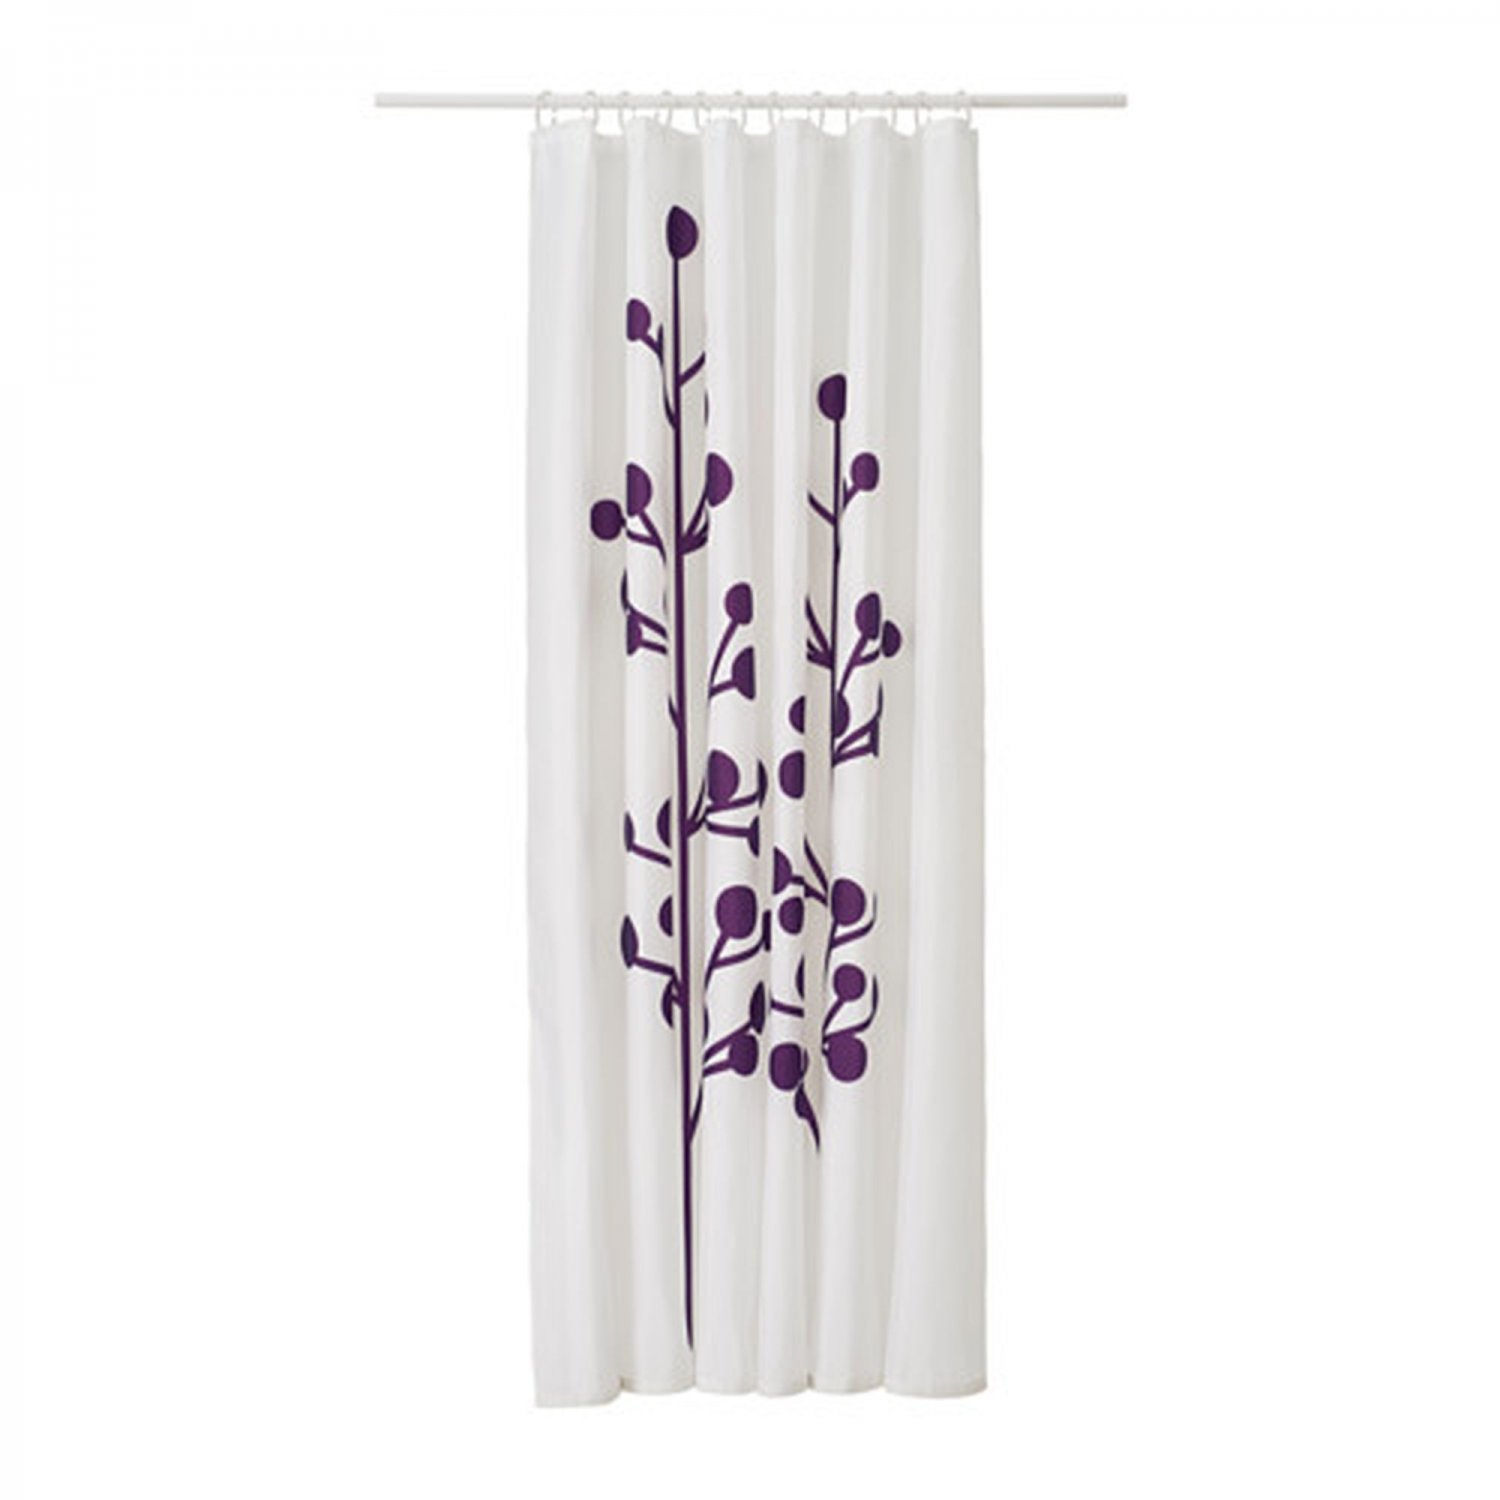 IKEA DRAMSELVA Fabric SHOWER Curtain LILAC Purple Floral Pattern WHITE